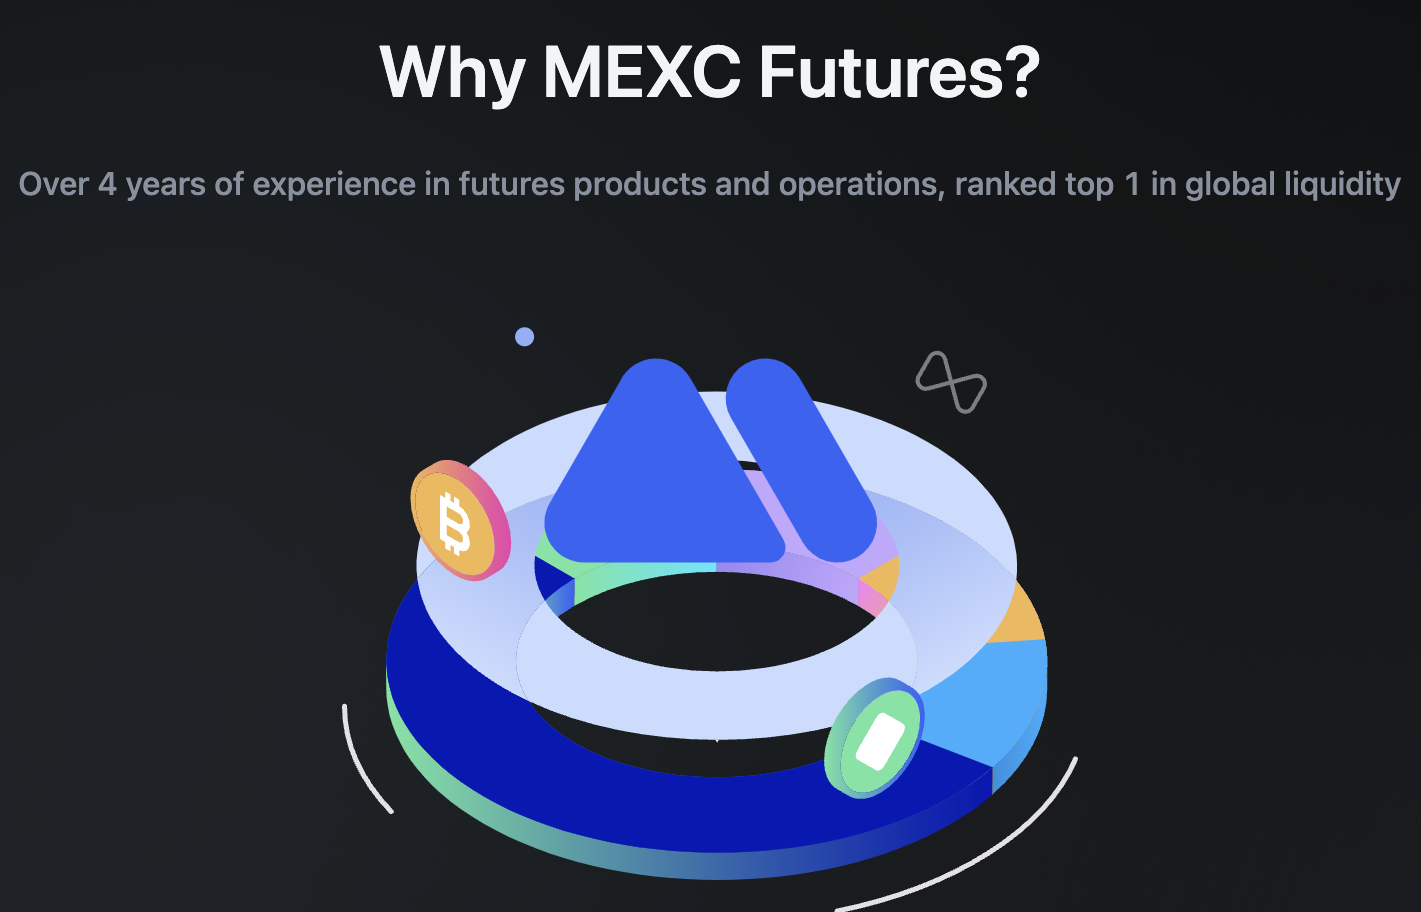 Futures Trading MEXC